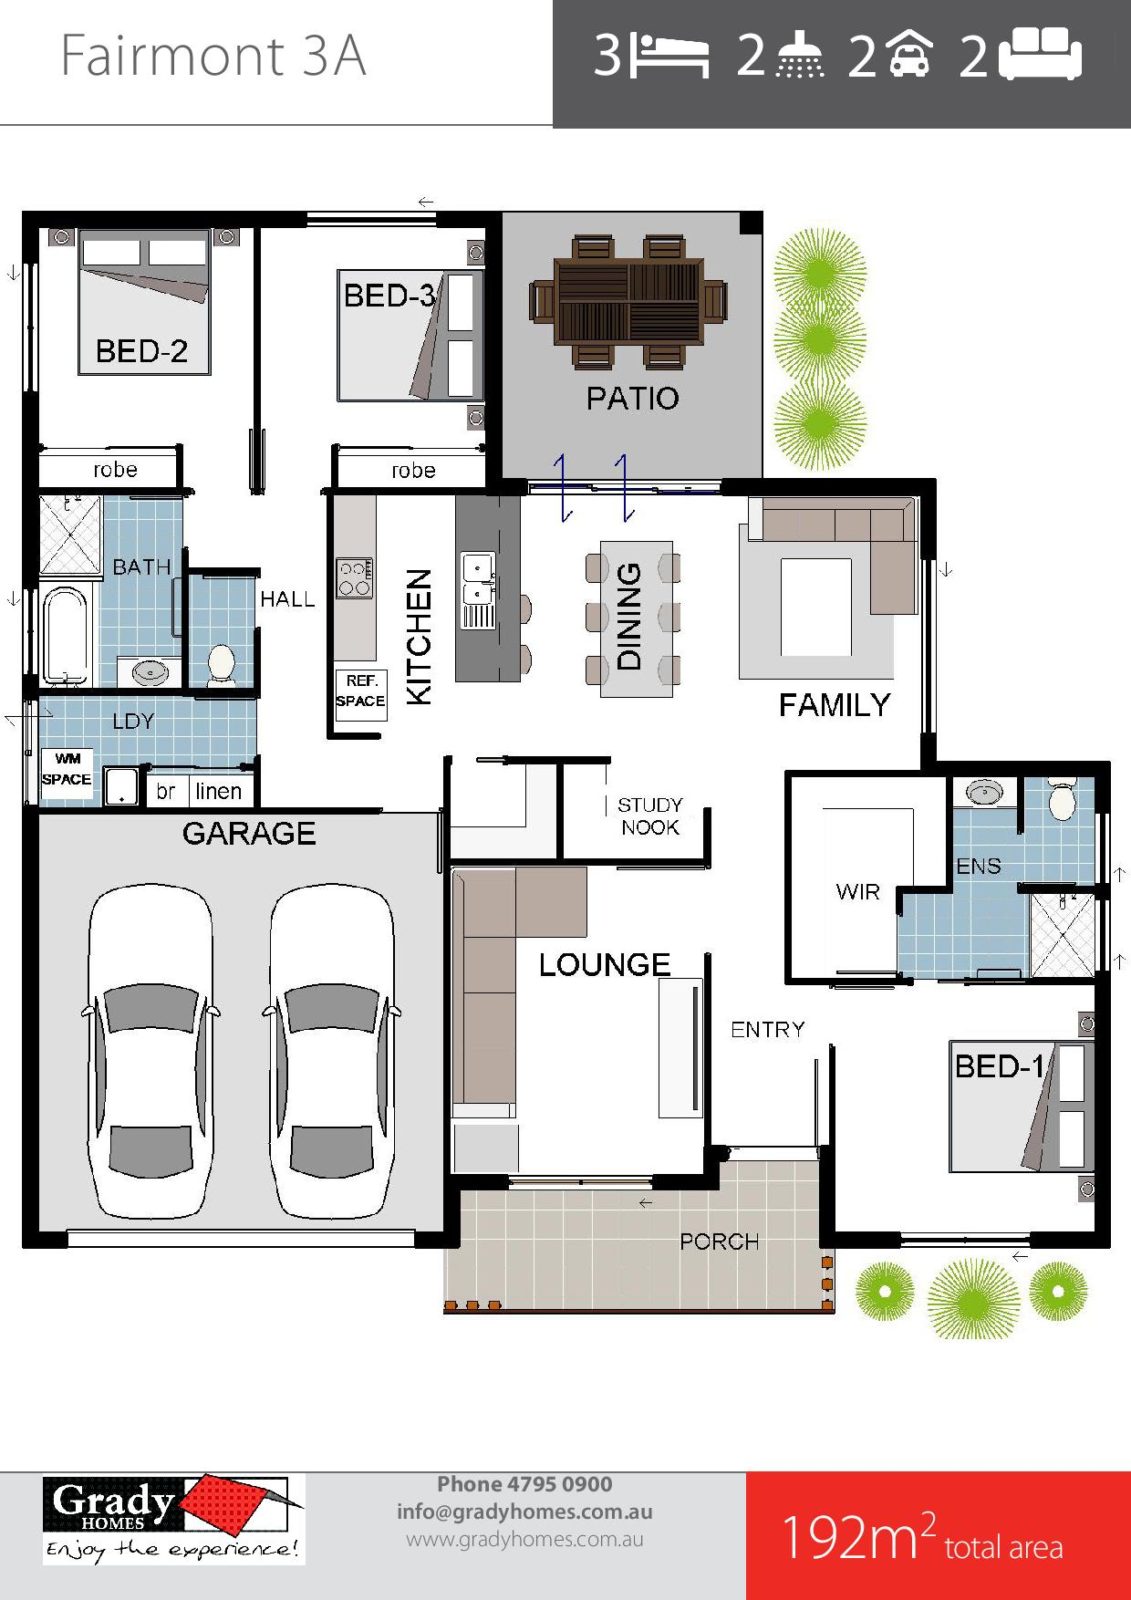 Fairmont 3A - Grady Homes Floor Plan Brochure